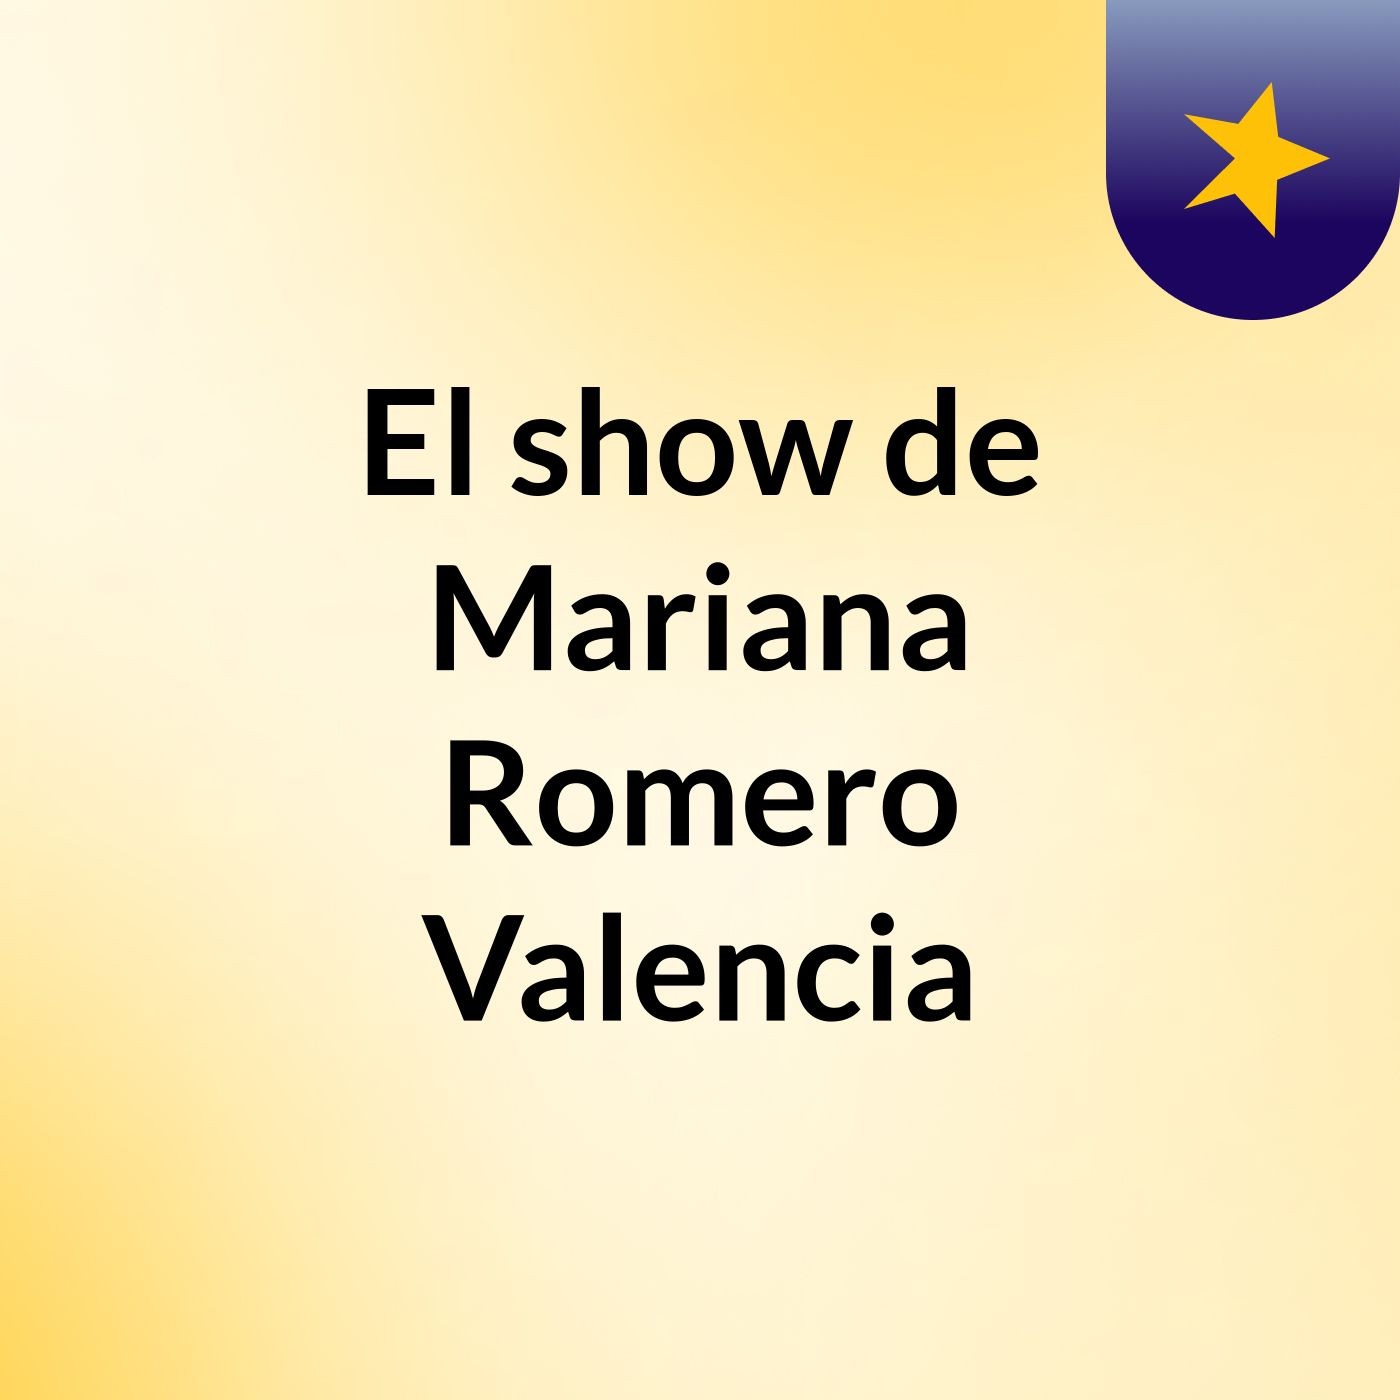 El show de Mariana Romero Valencia